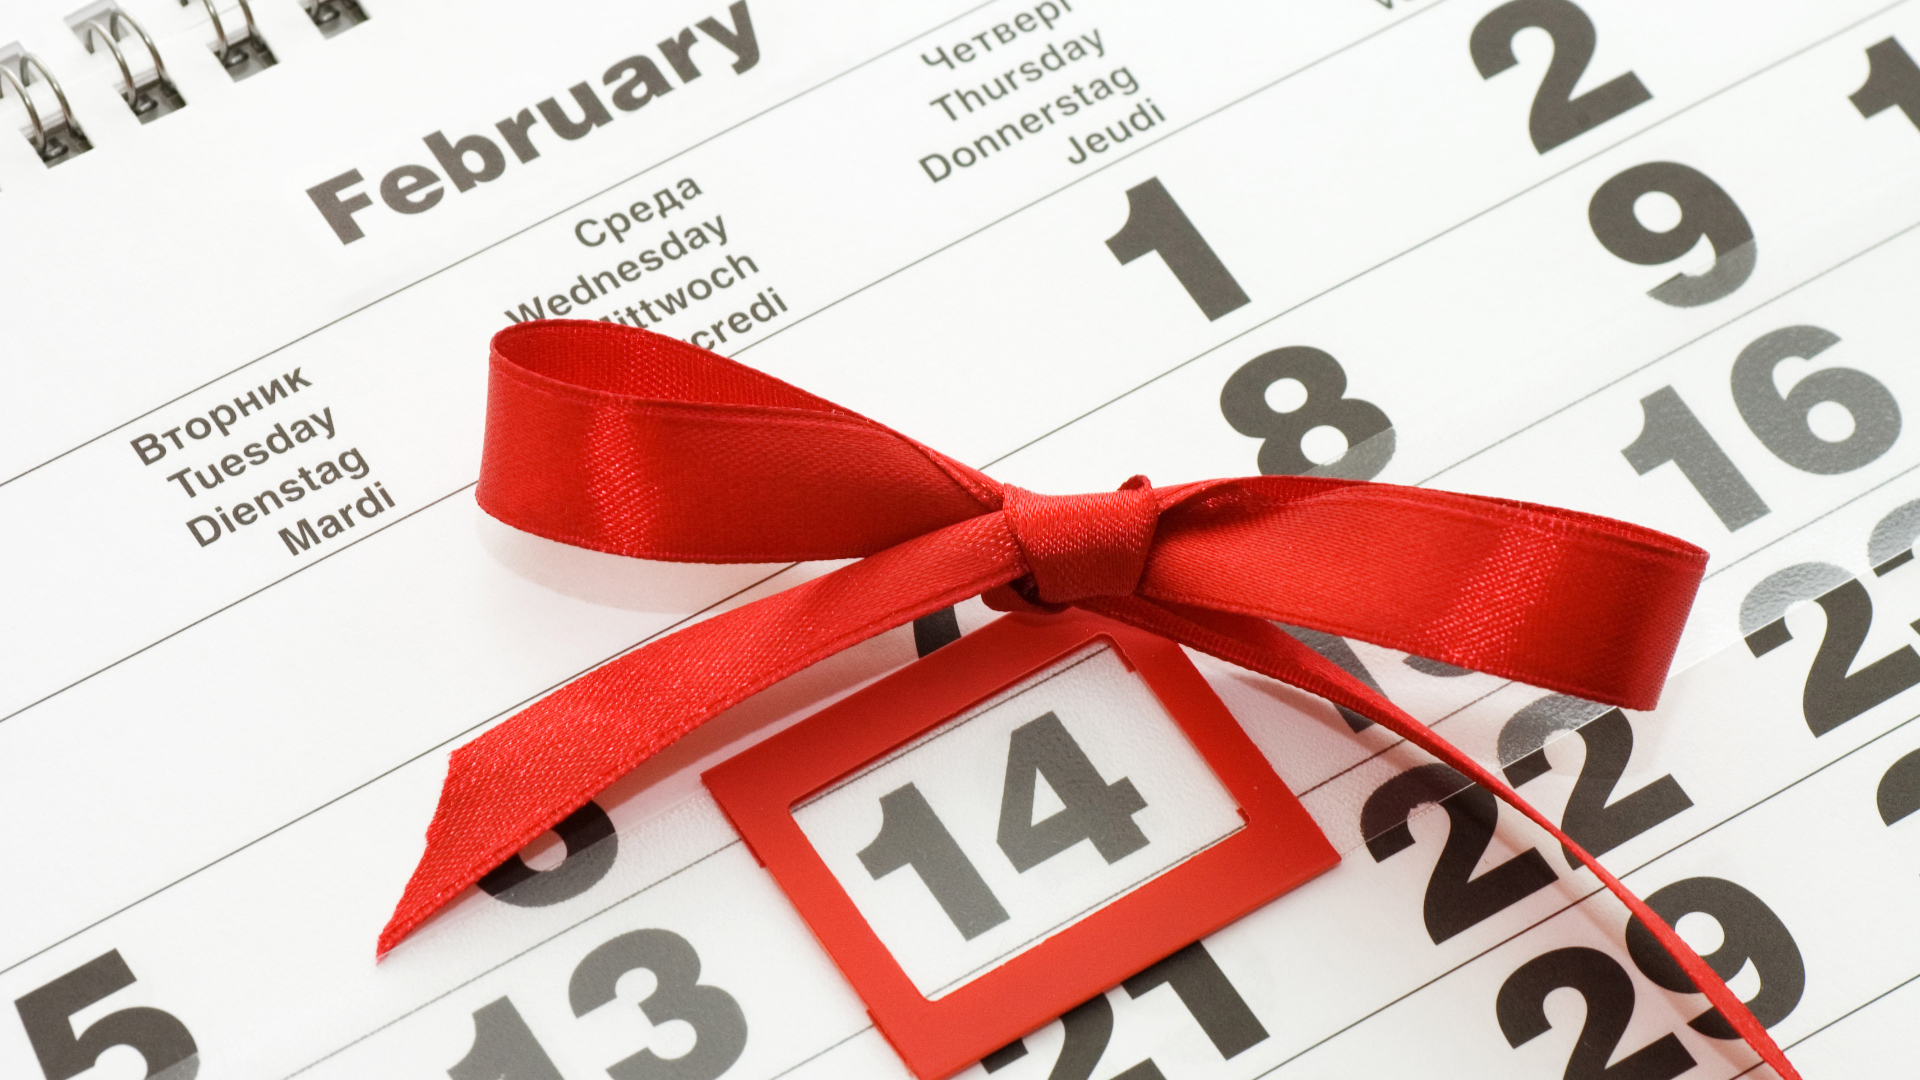 Calendar for Valentine's Day February 14